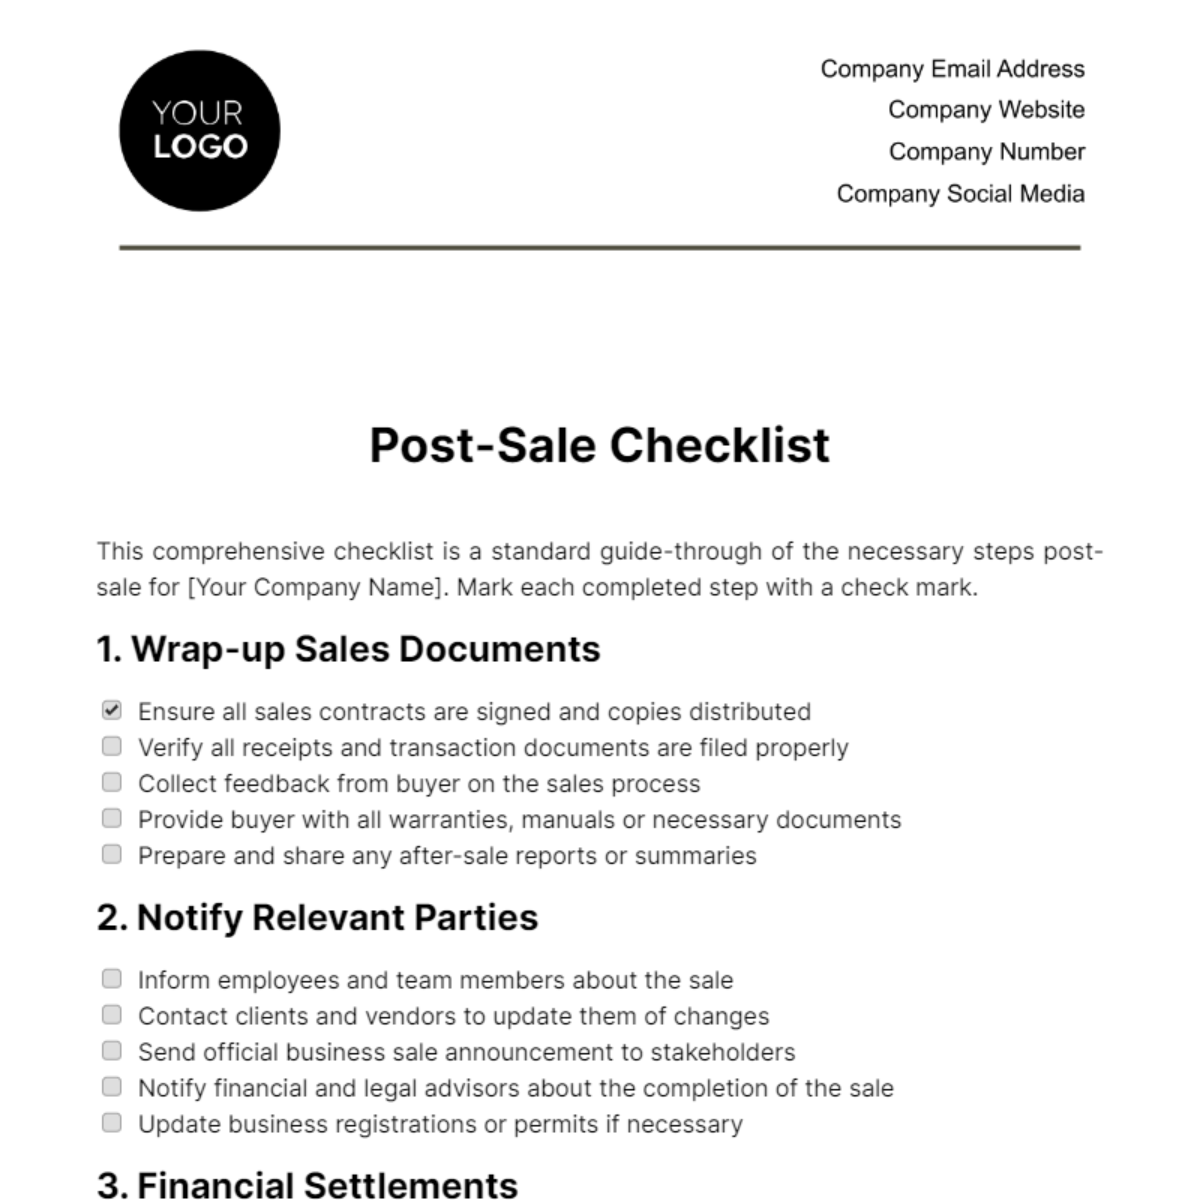 Post-Sale Checklist Template